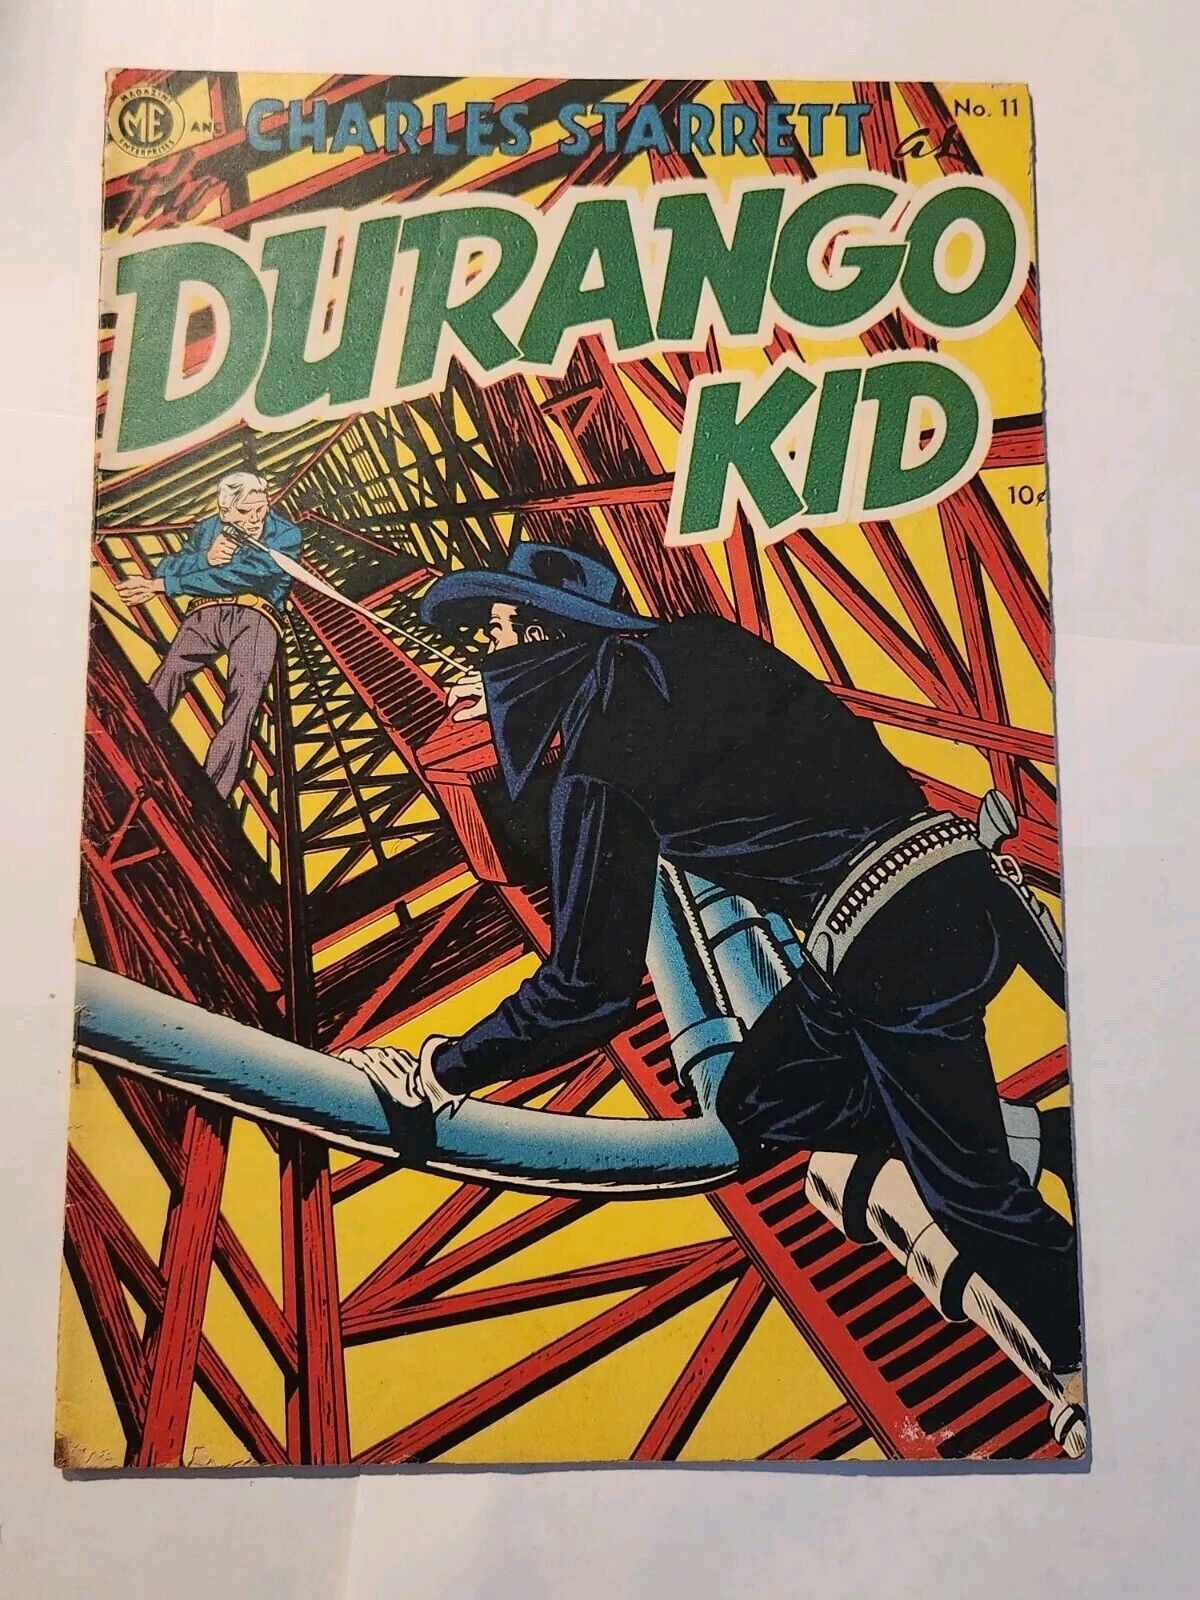 Durango Kid #11 - 1951 Comic book, See Photos For Condition Golden Age Western